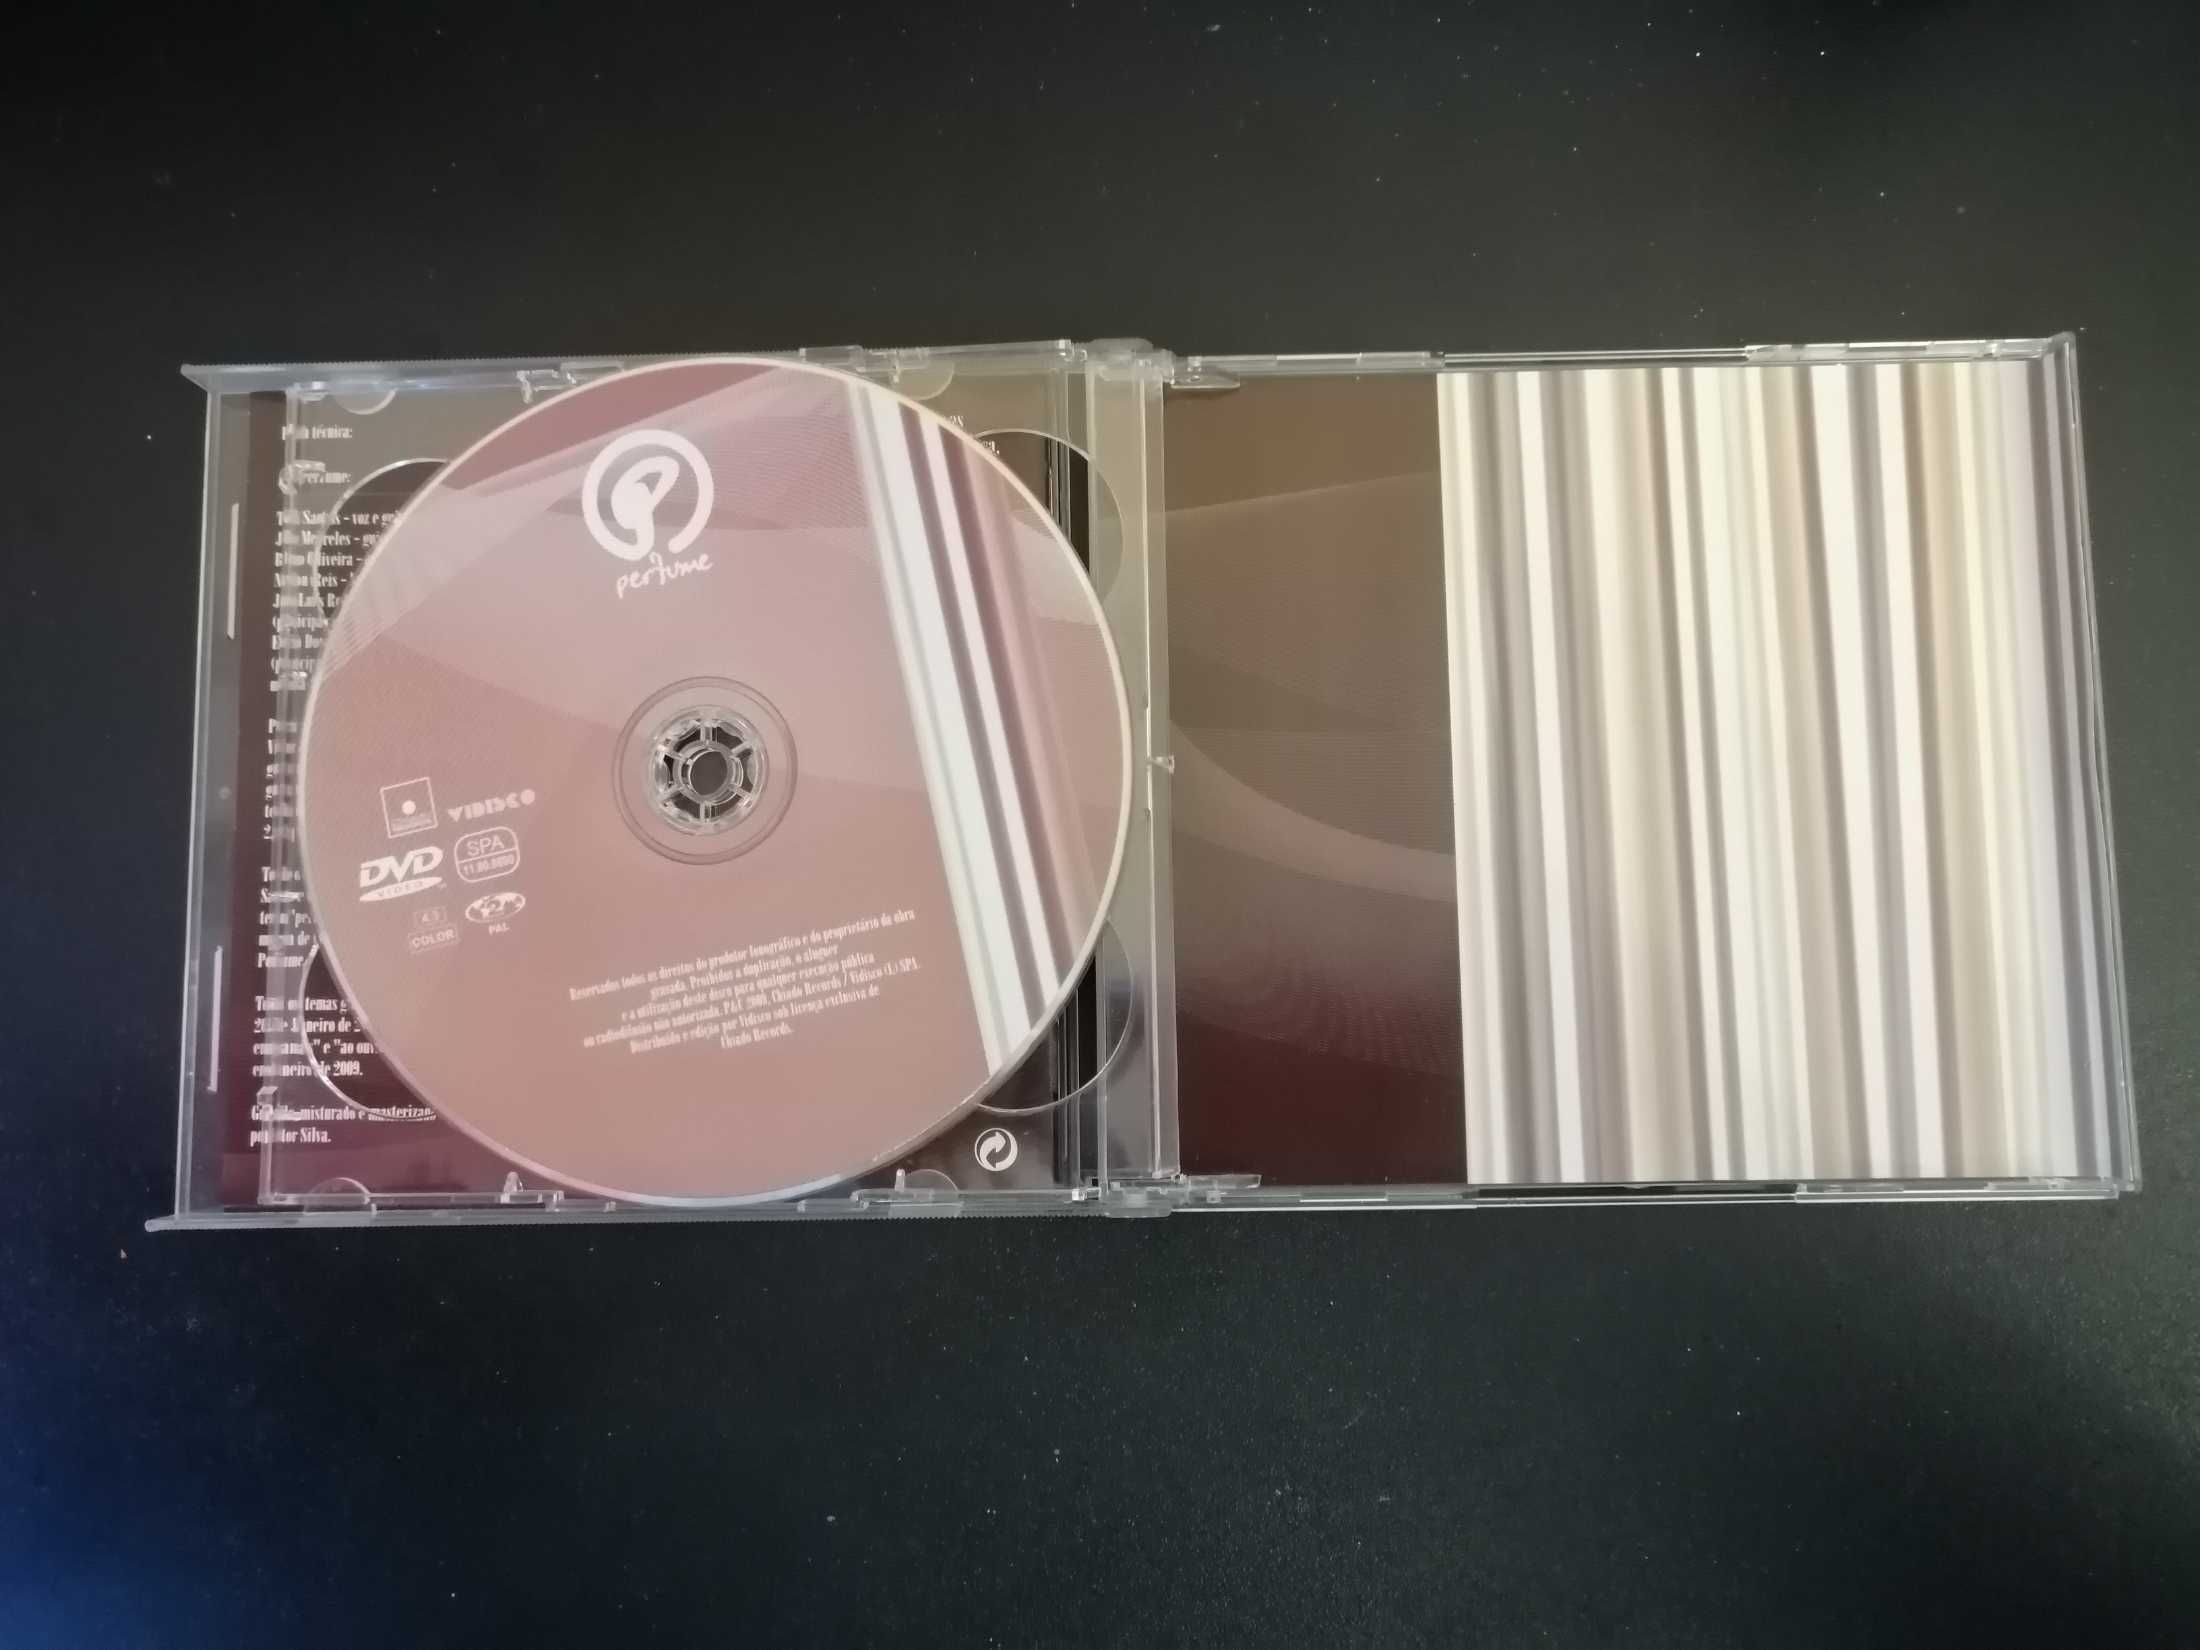 CD Perfume + DVD Concerto Aula Magna - Excelente estado